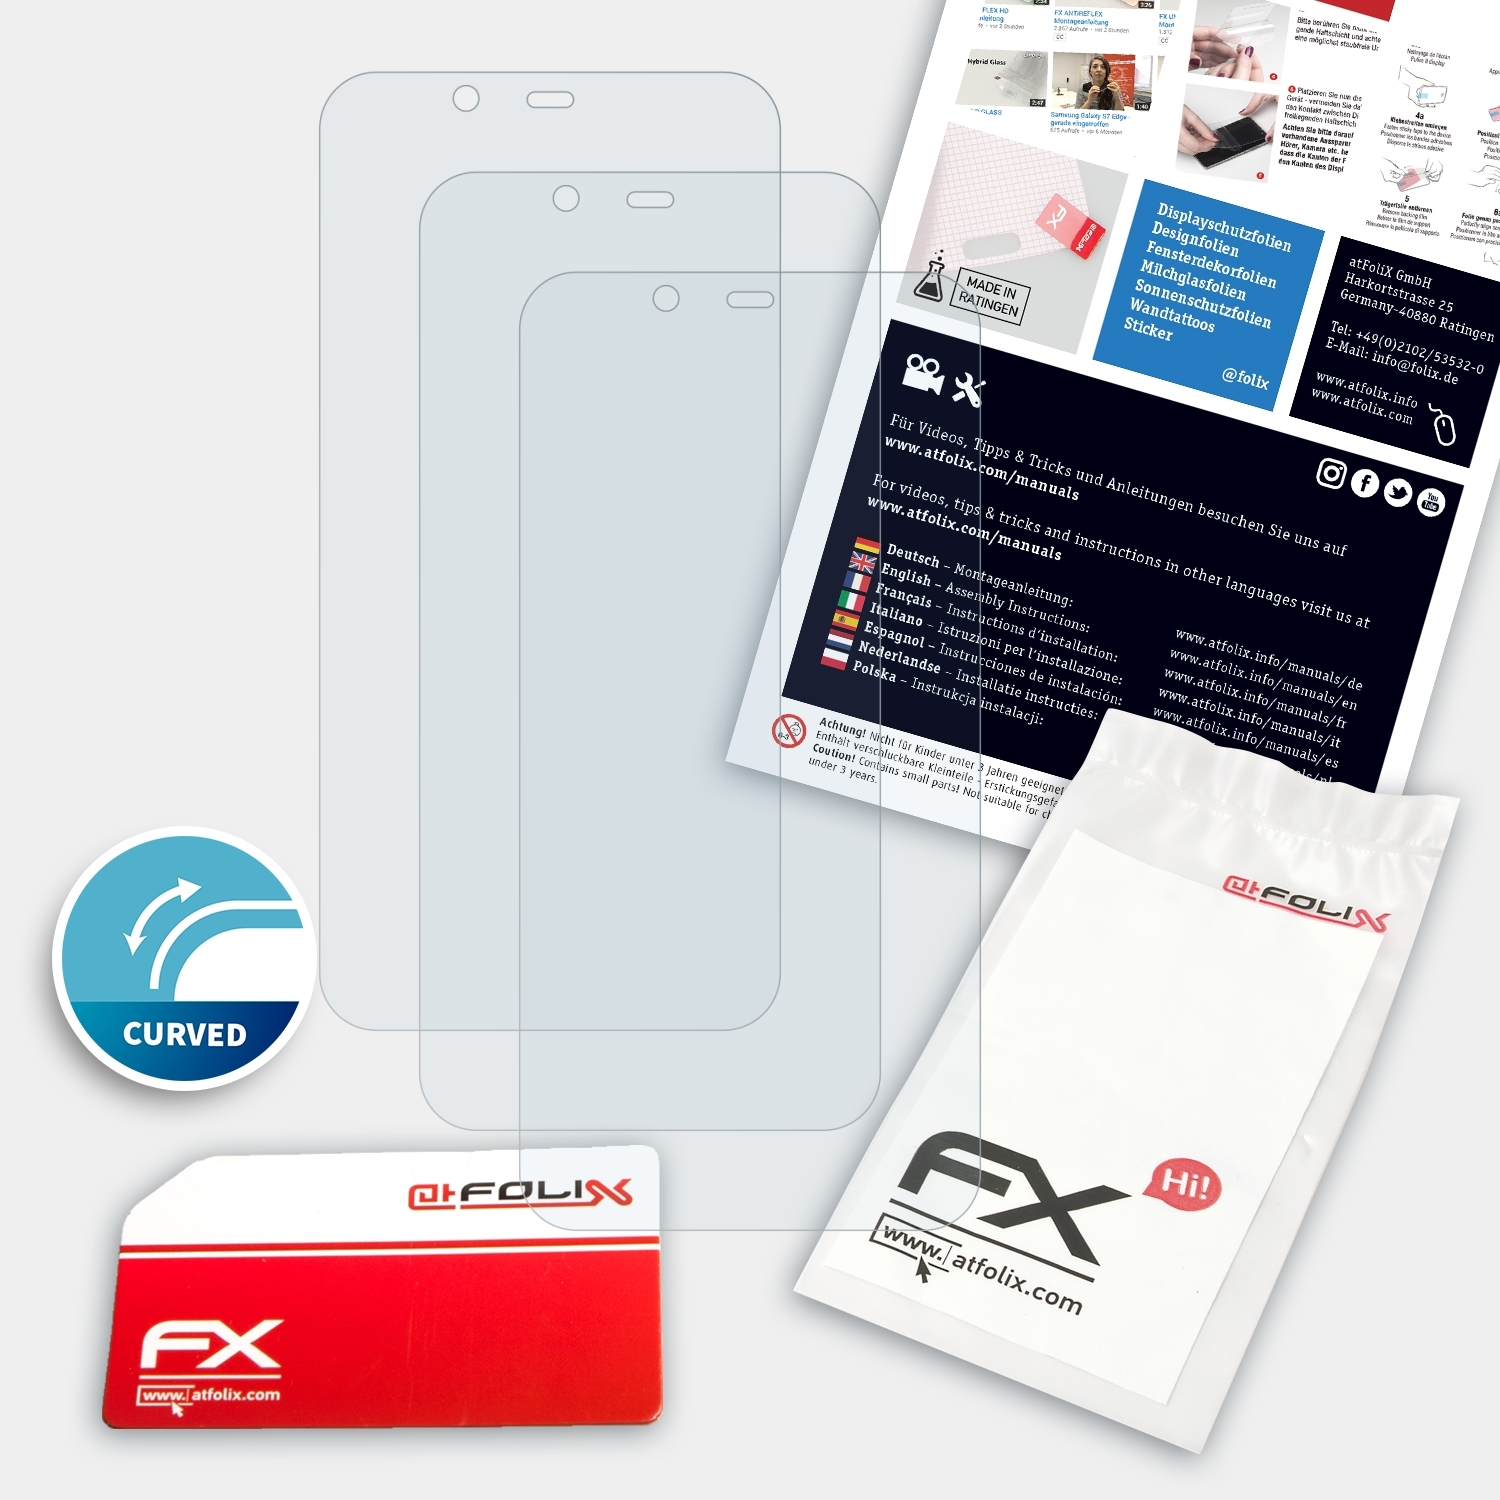 Nokia ATFOLIX FX-ActiFleX Displayschutz(für 8.1) 3x